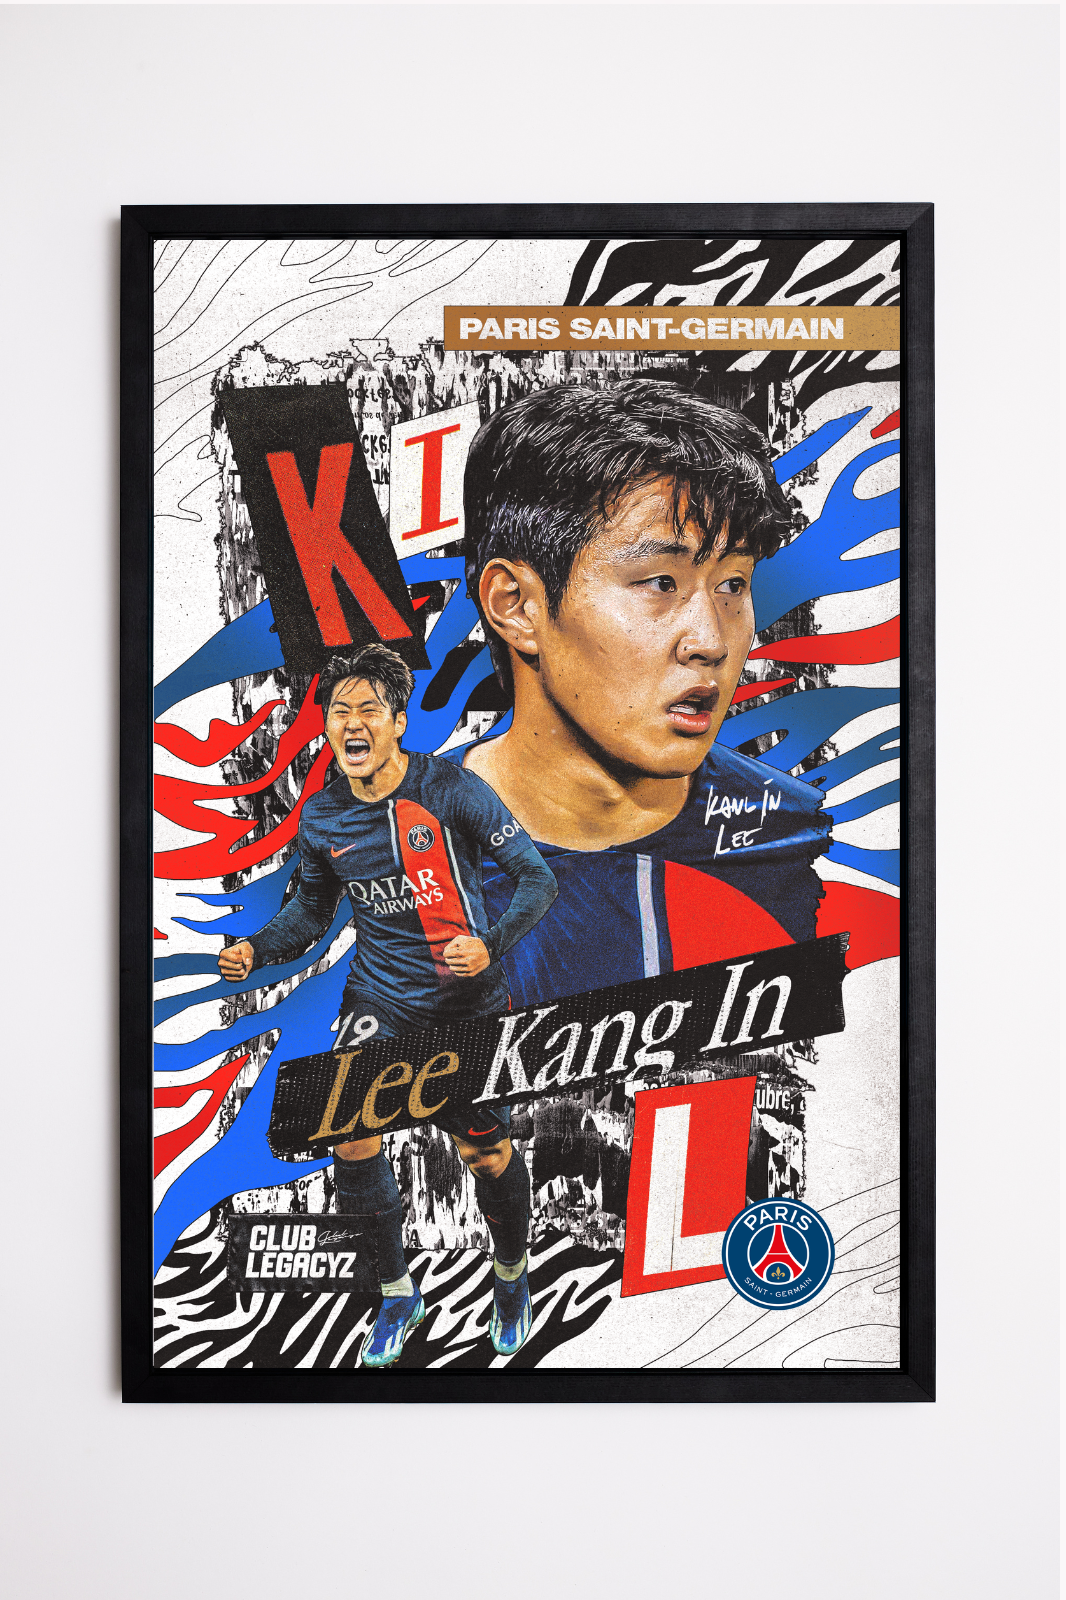 Paris Saint-Germain - Lee Kang-in Poster limited to 999